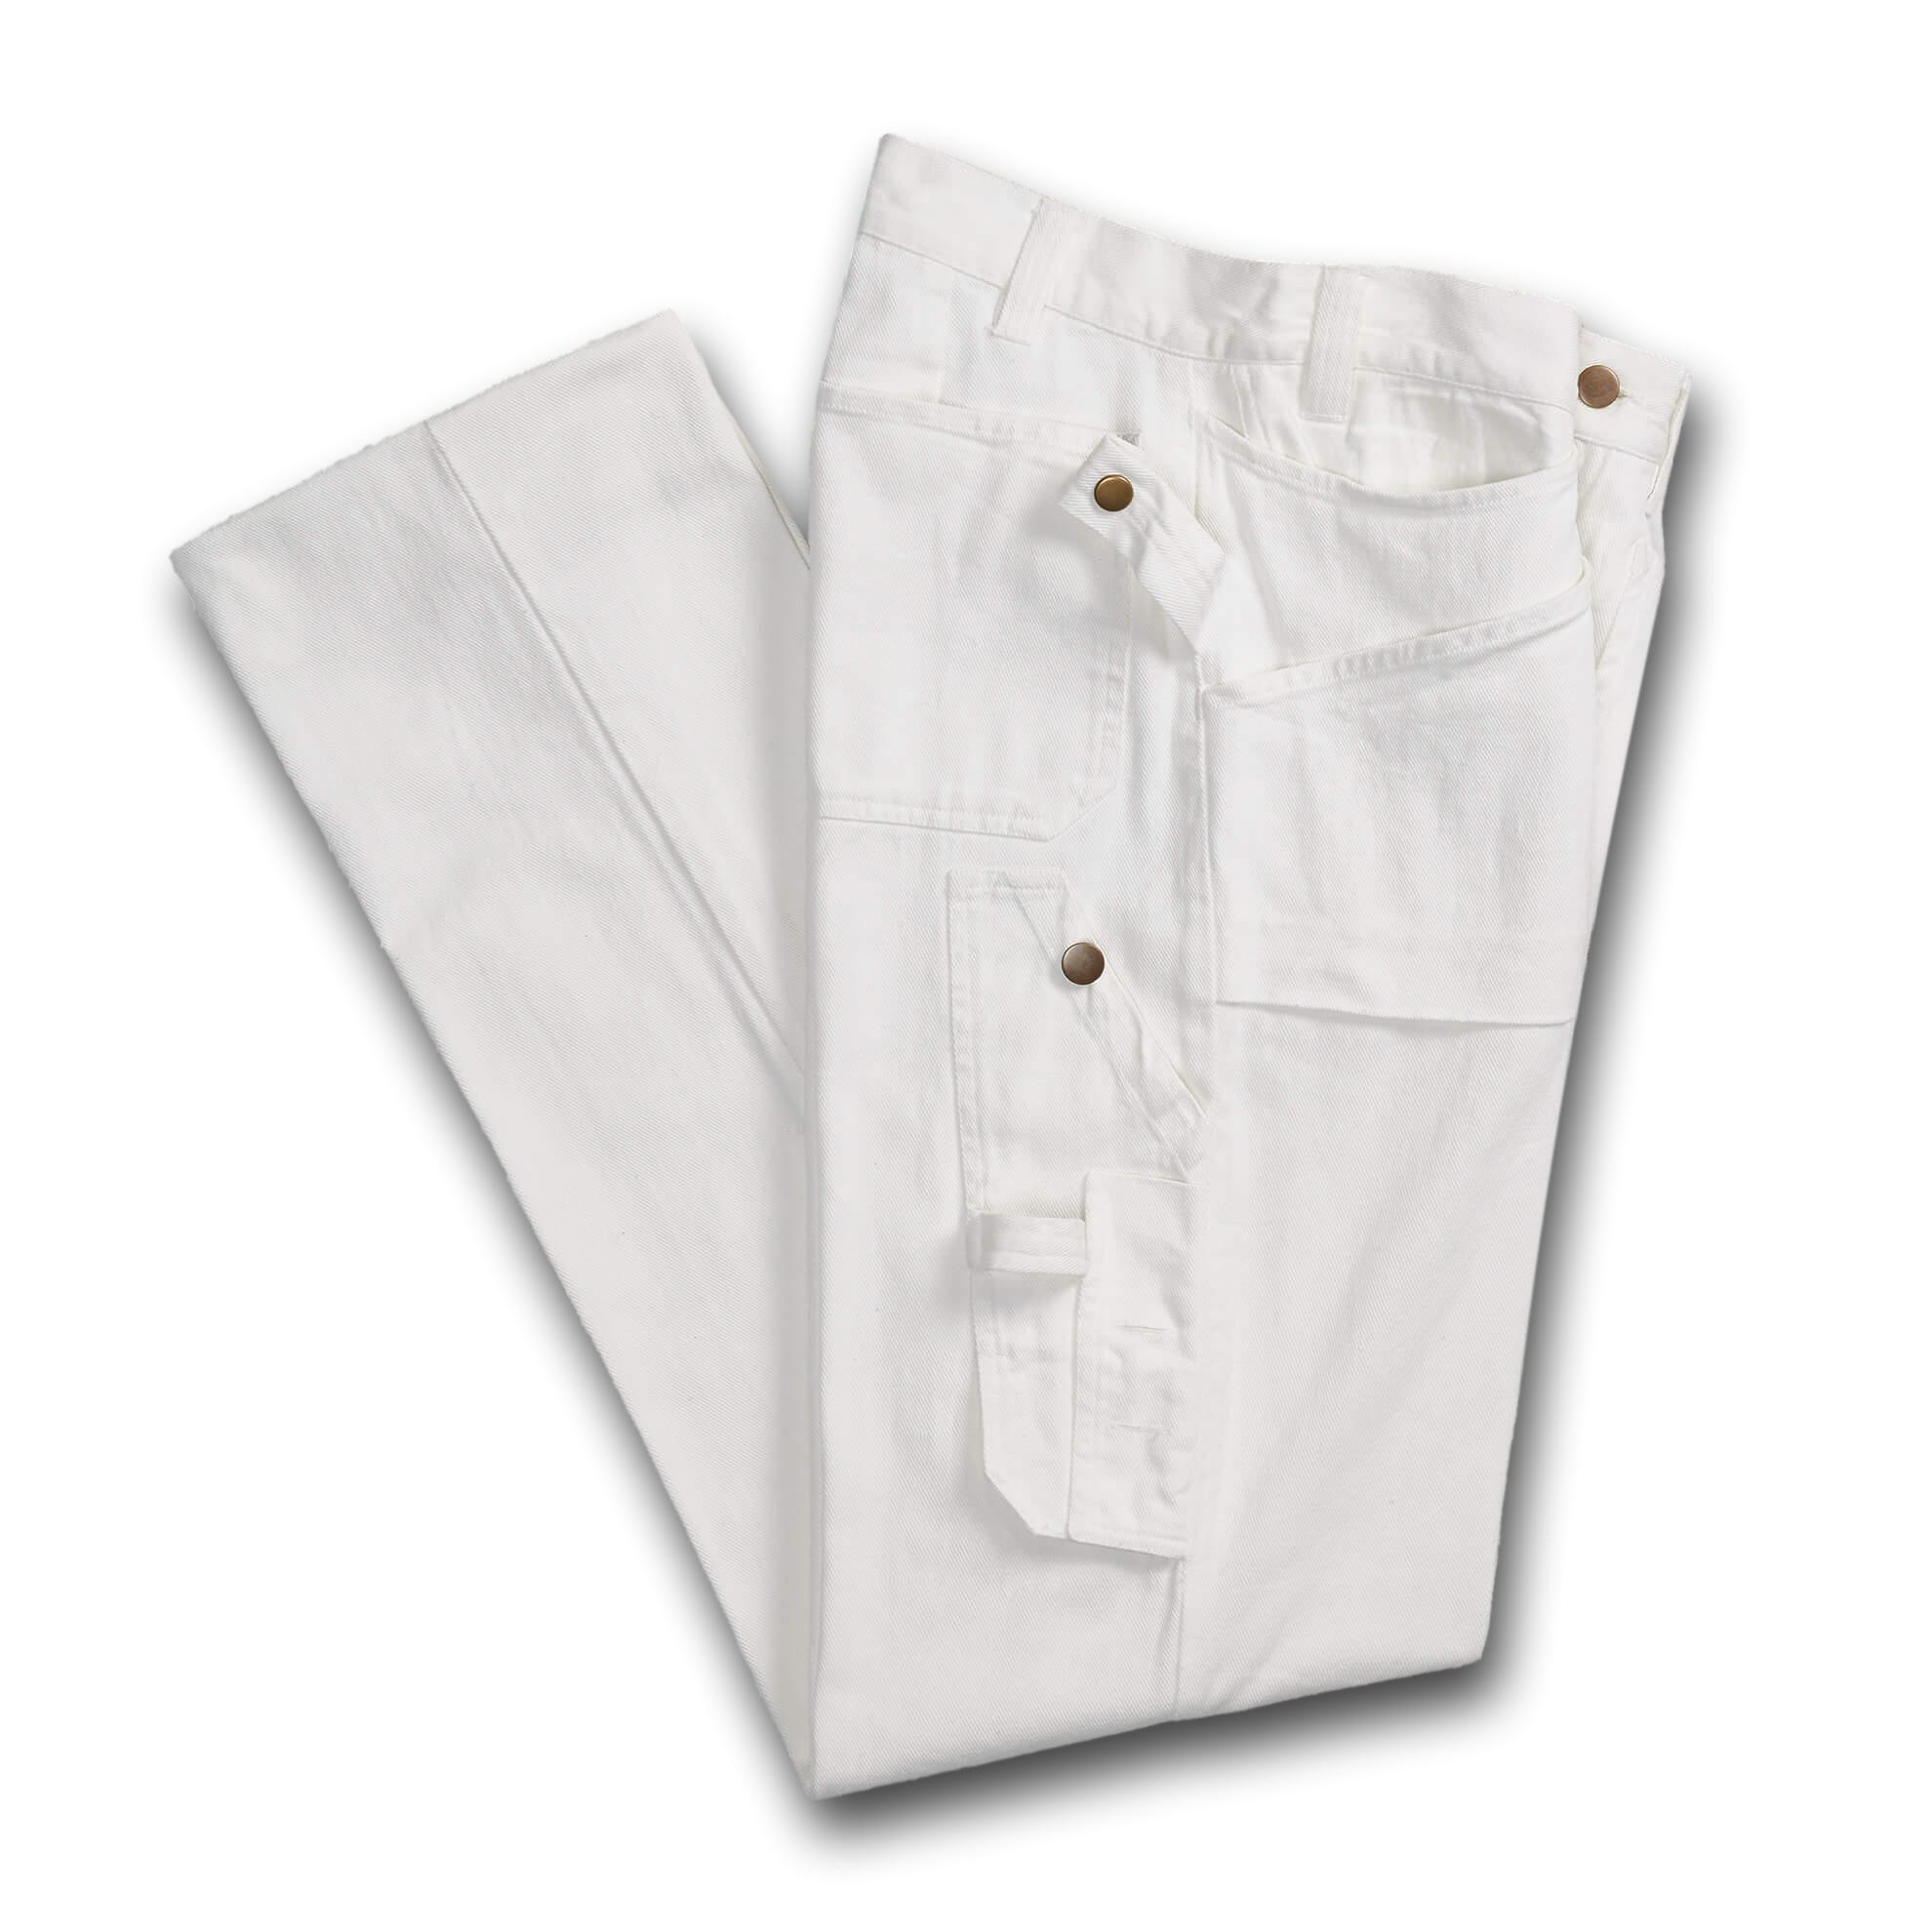 J. Peterman Men's Relaxed Fit Cotton Painter's Pants - Off-White